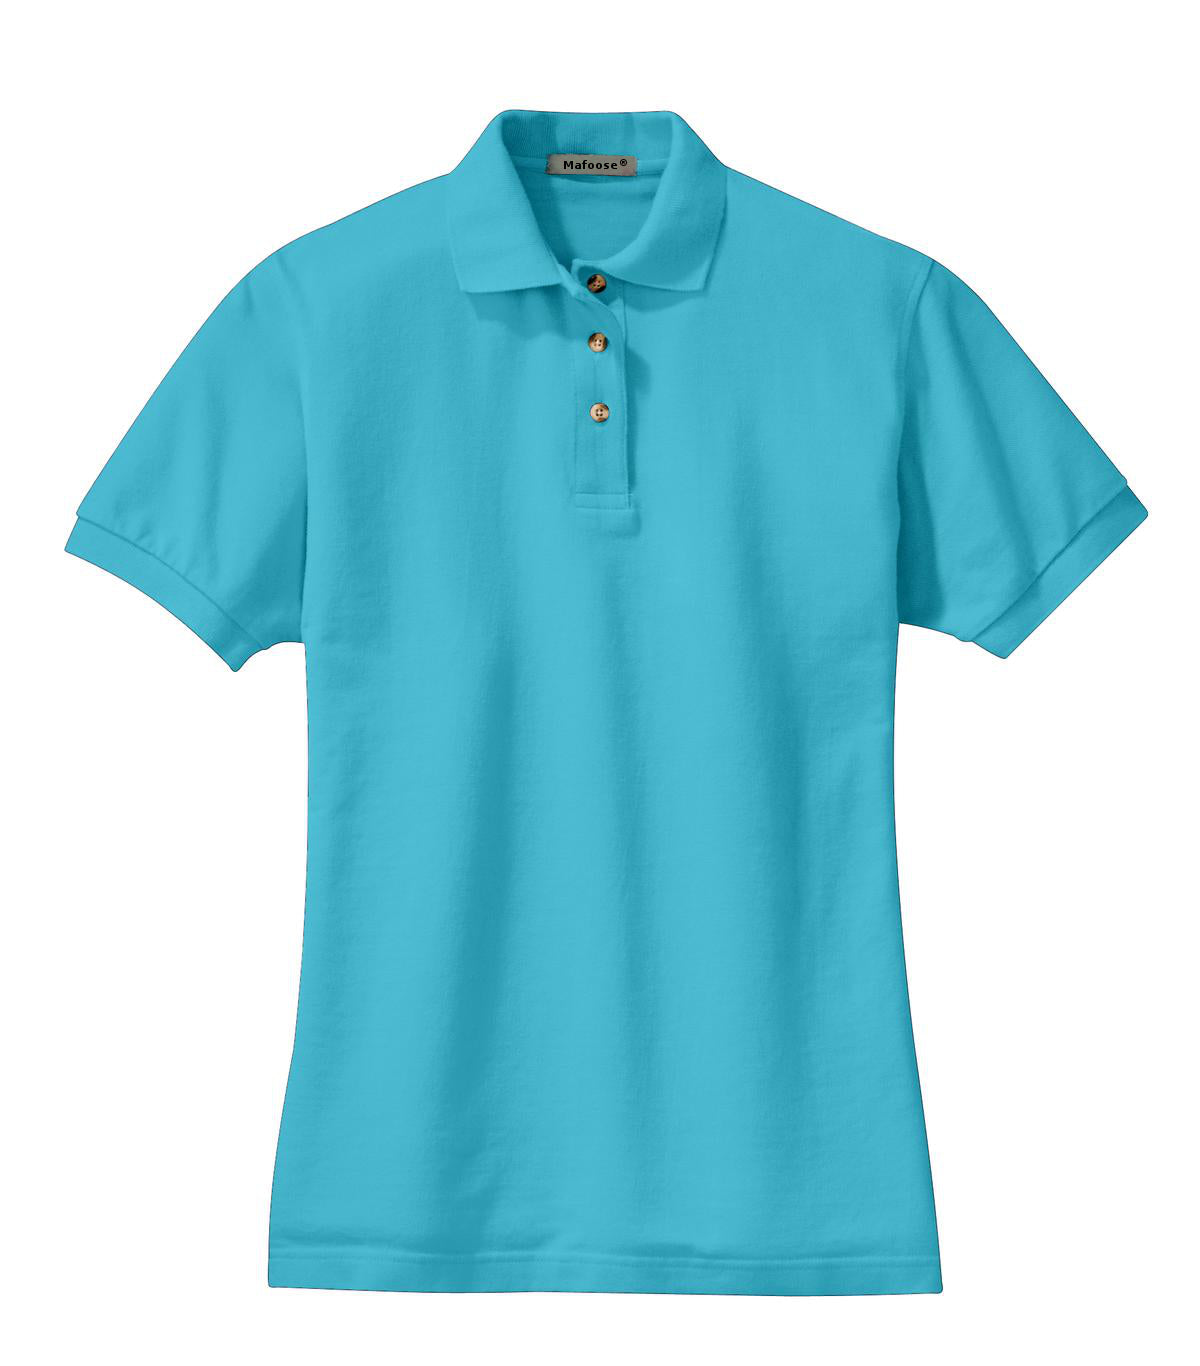 Mafoose Women's Heavyweight Cotton Pique Polo Shirt Turquoise-Front